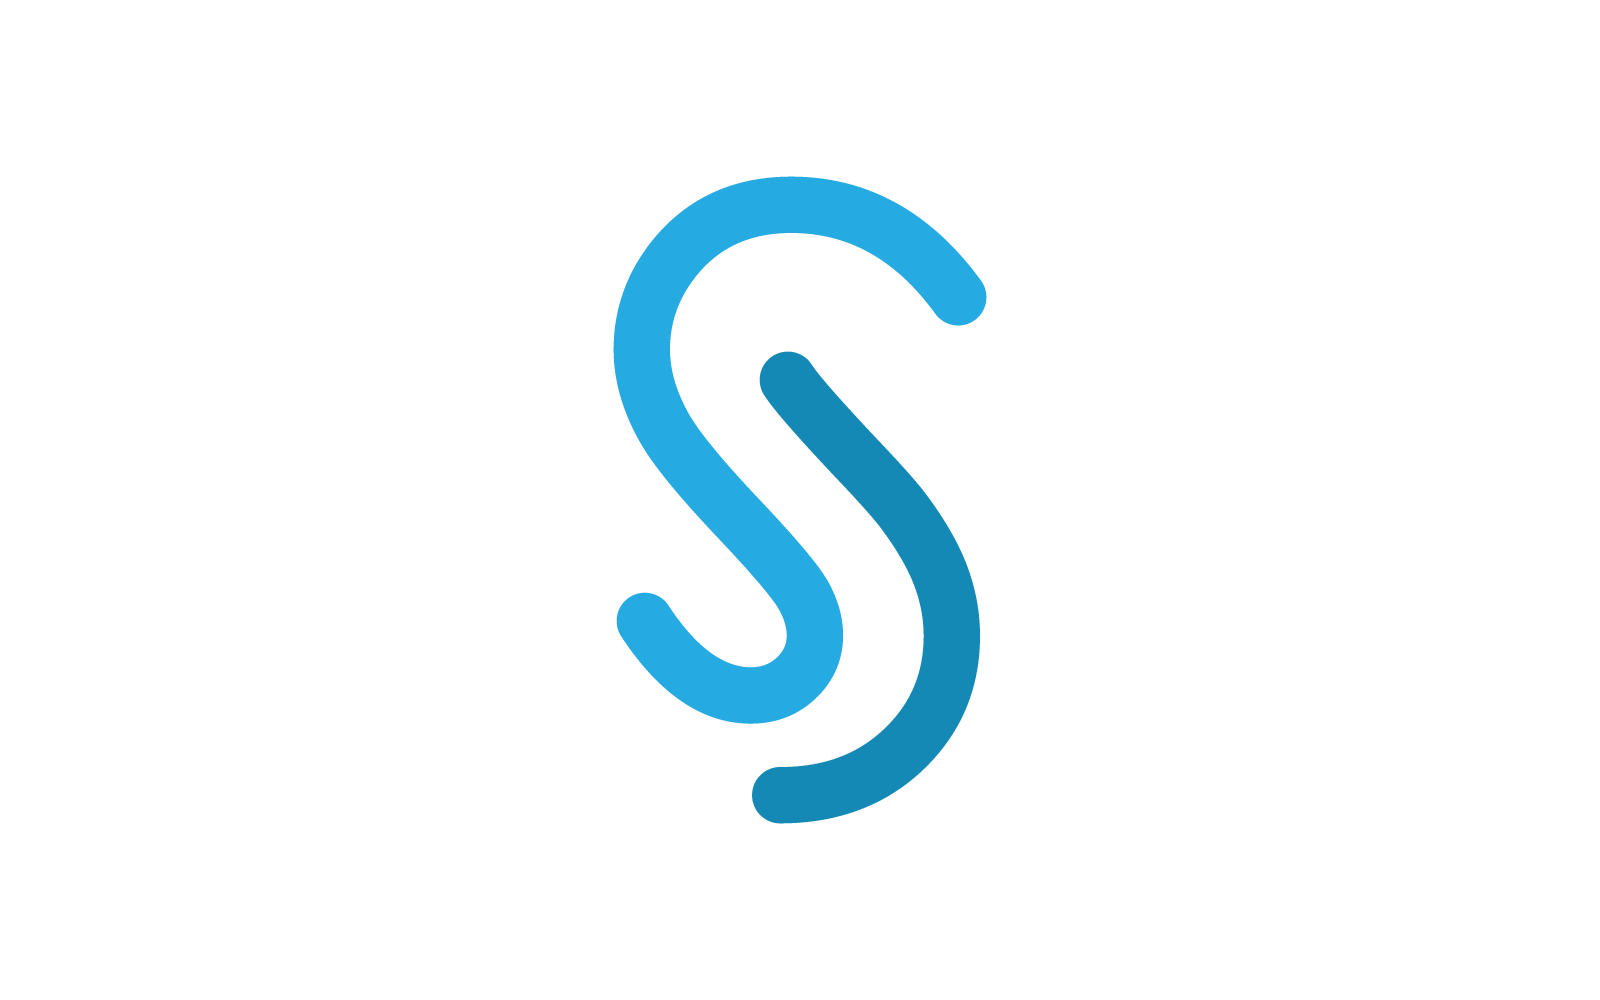 S Initial letter alphabet font logo vector design Logo Template